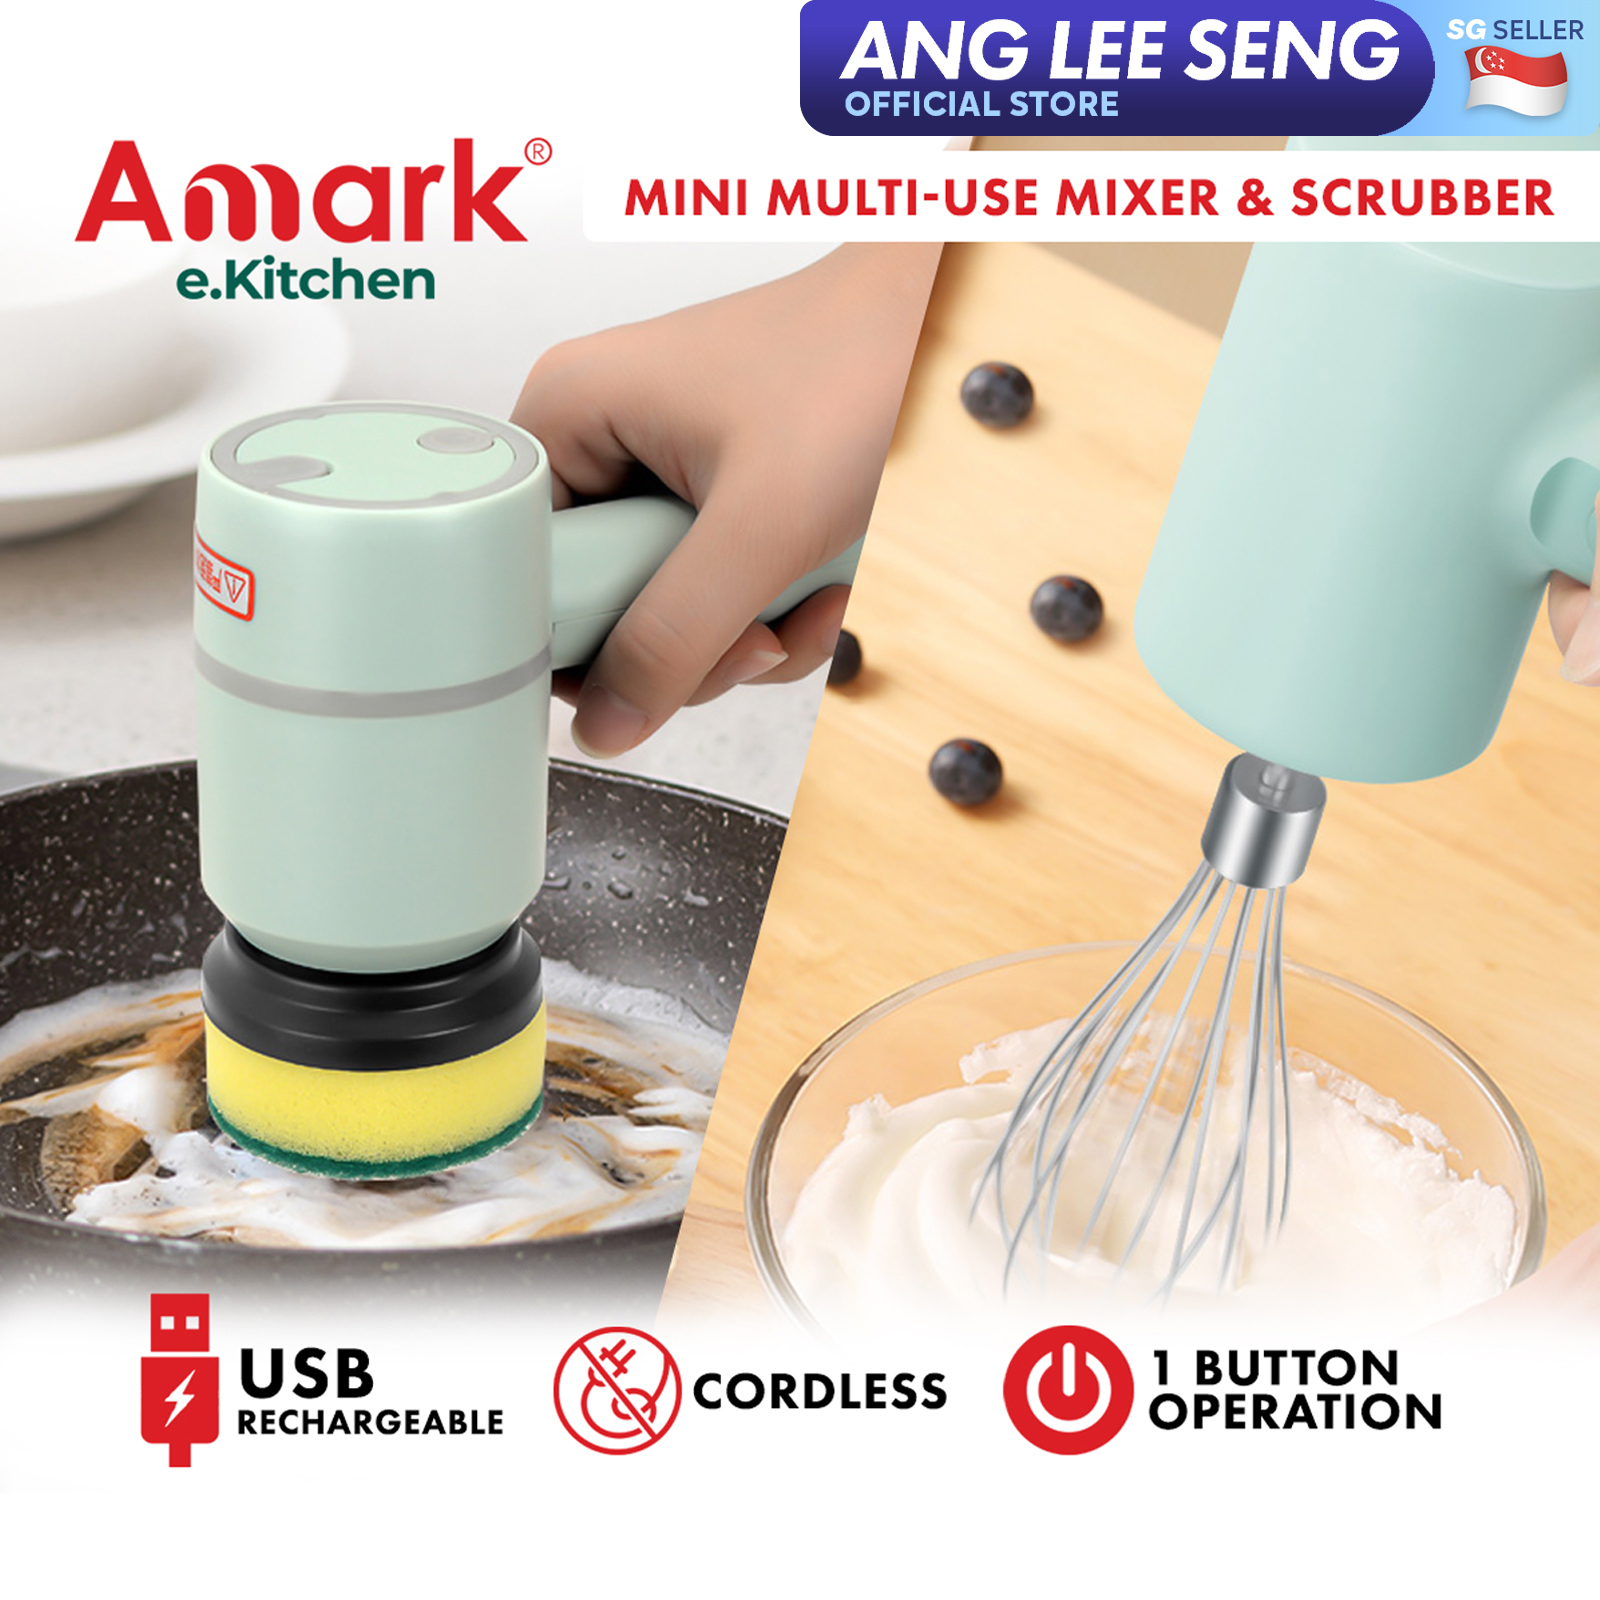 Amark e.Kitchen Cordless USB-Rechargeable Multi-Use Mixer & Scrubber - 5pc Attachments Set